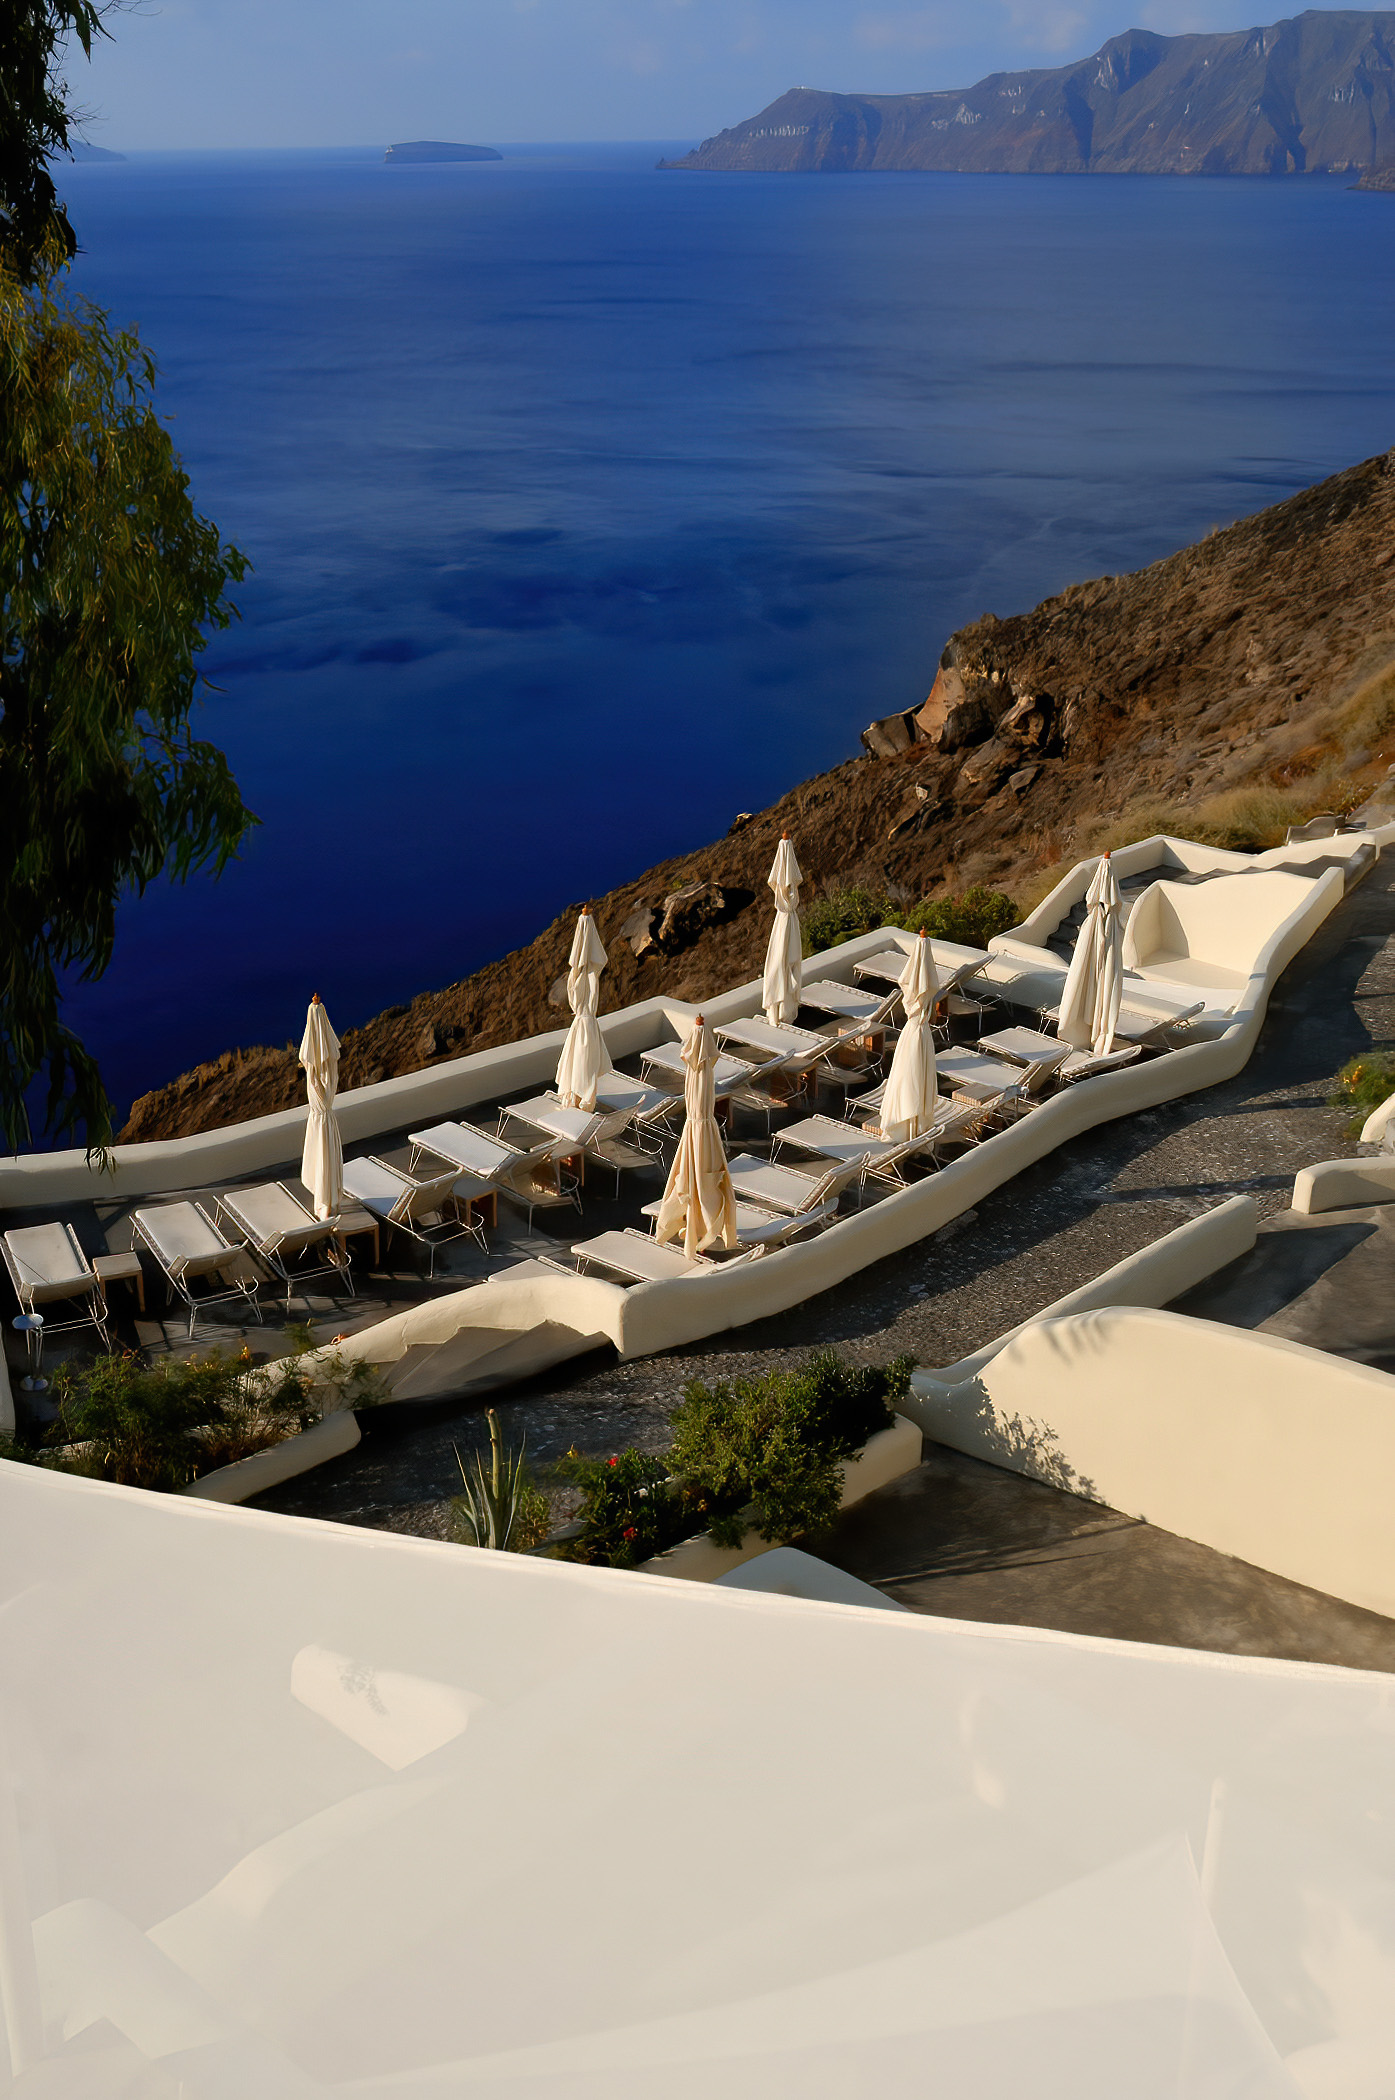 Mystique Hotel Santorini – Oia, Santorini Island, Greece – Ocean View Pool Deck Patio Chairs